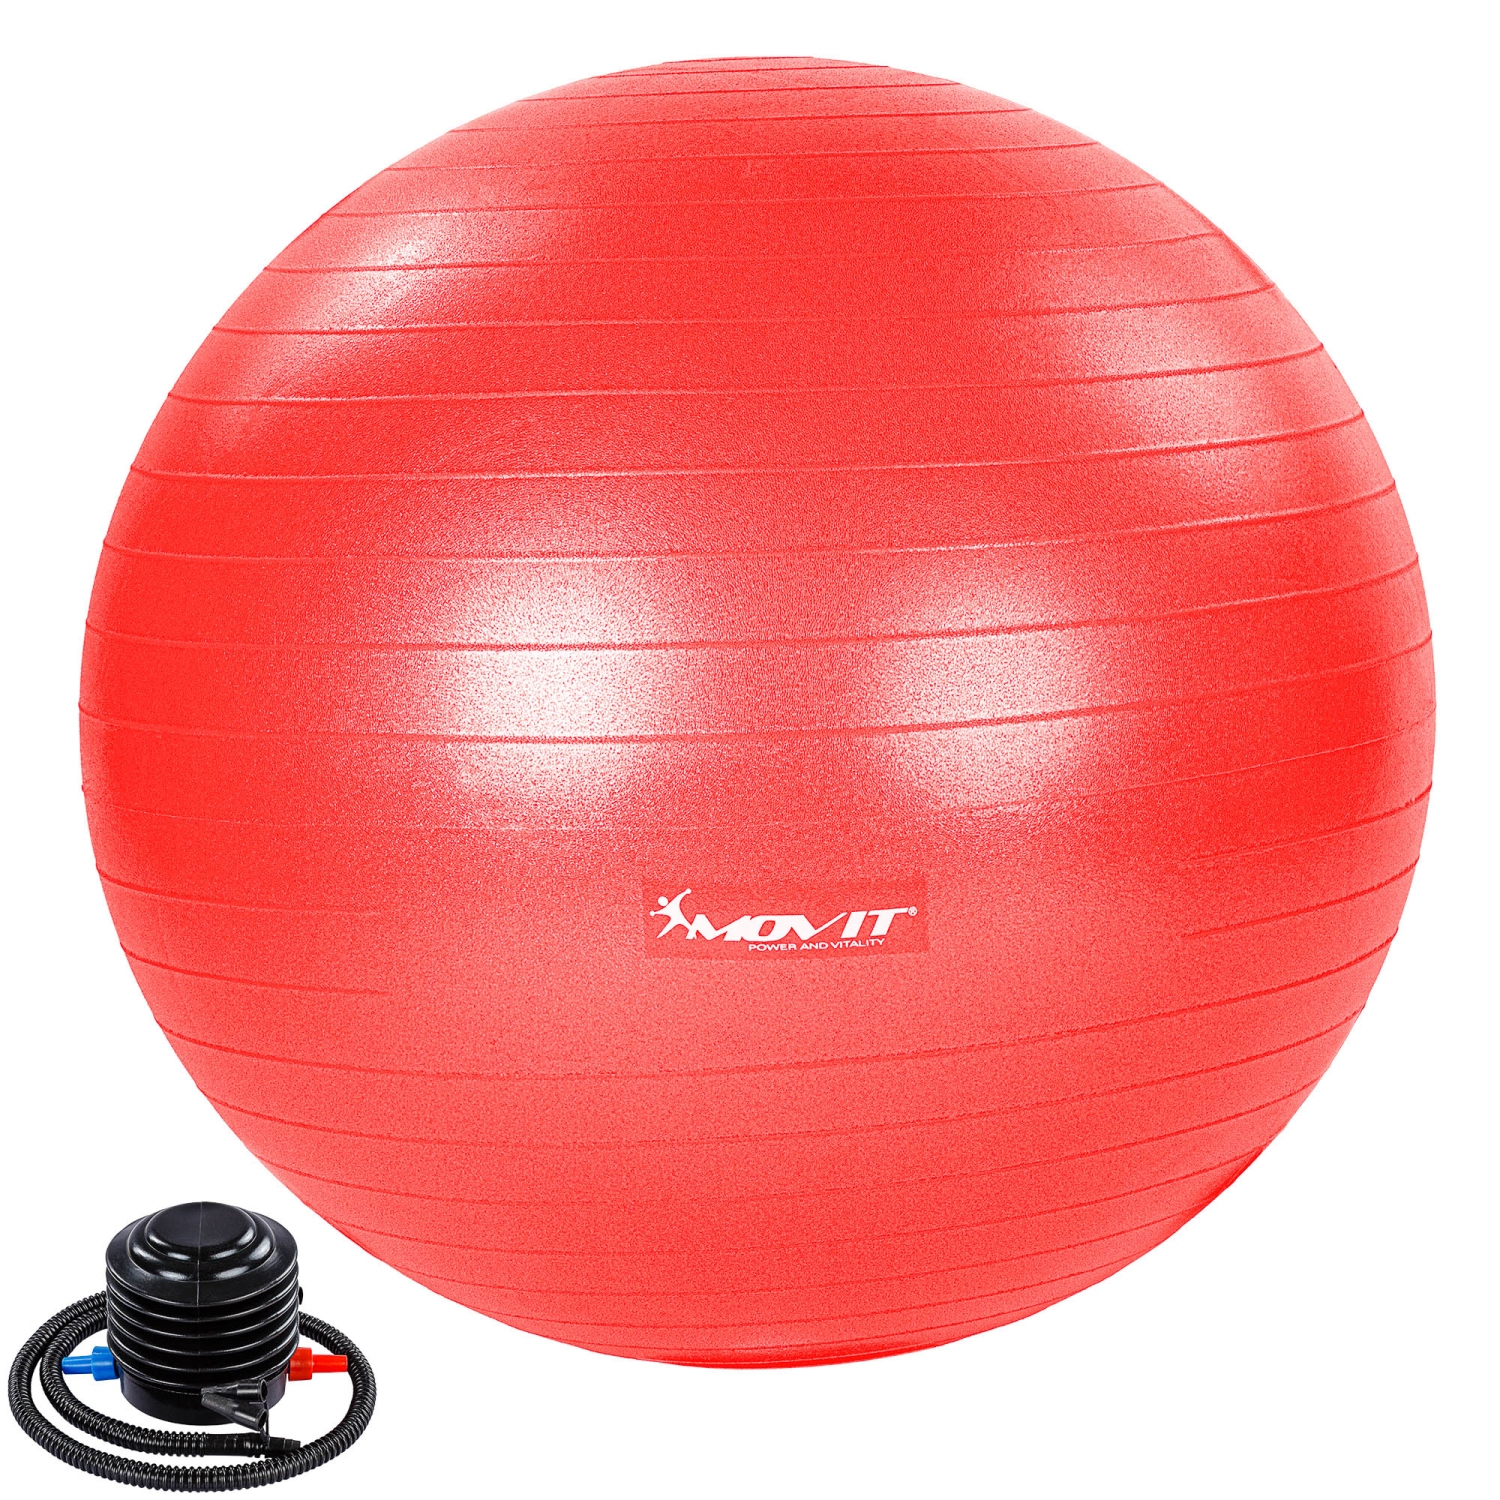 Yoga bal – Pilates bal – Fitness bal – 65 cm – Inclusief pomp – Rood